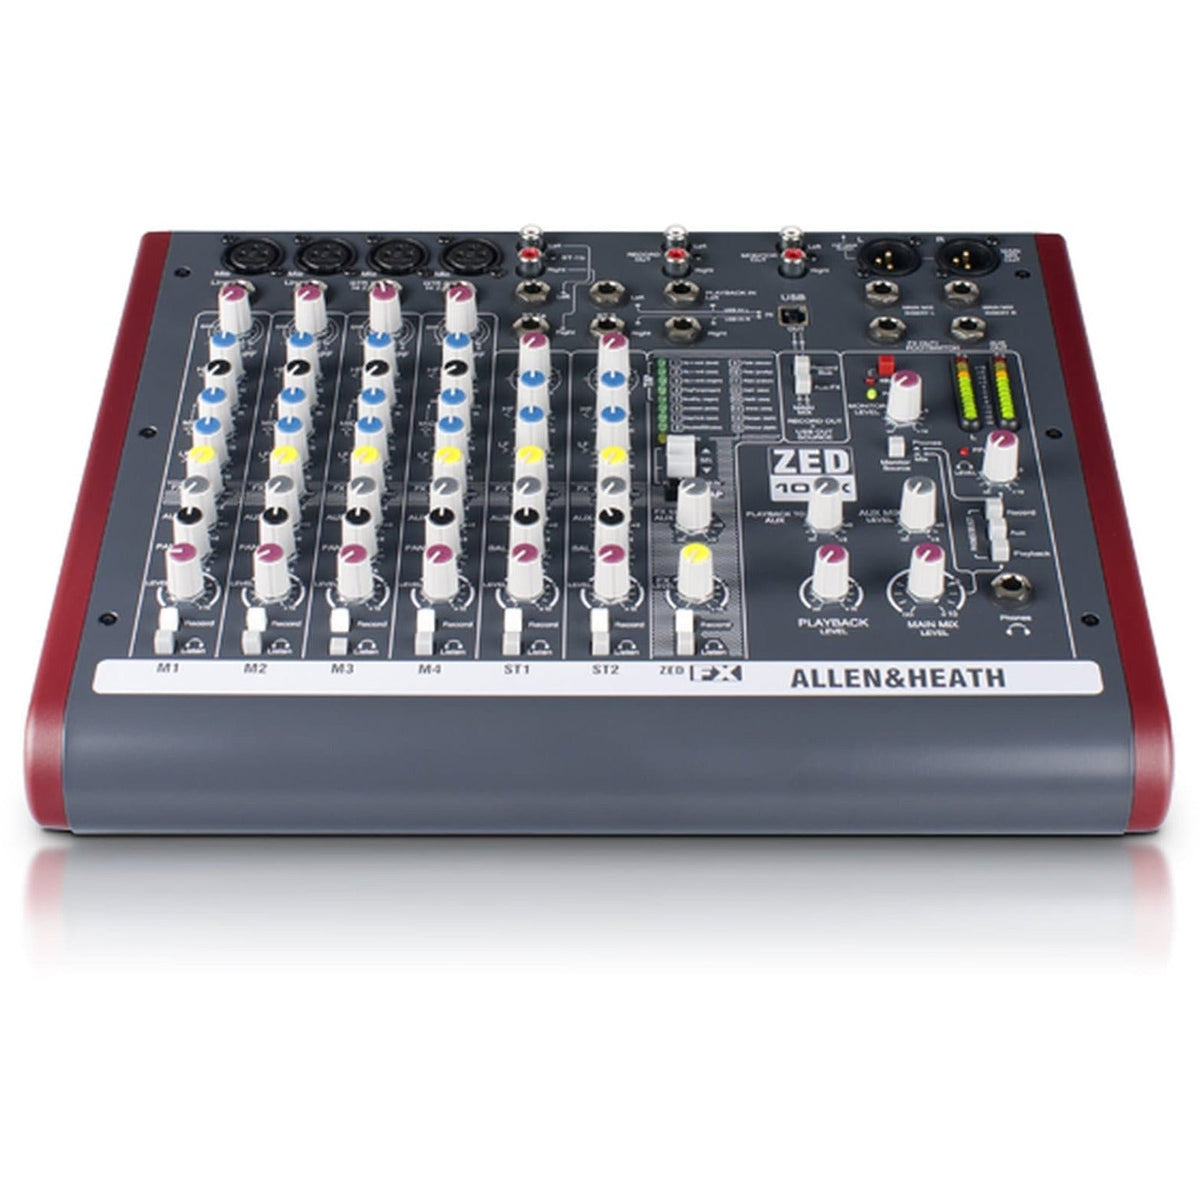 Allen &amp; Heath Recording Allen &amp; Heath ZED-10FX Mixer 10-Input with USB Audio Interface - Byron Music